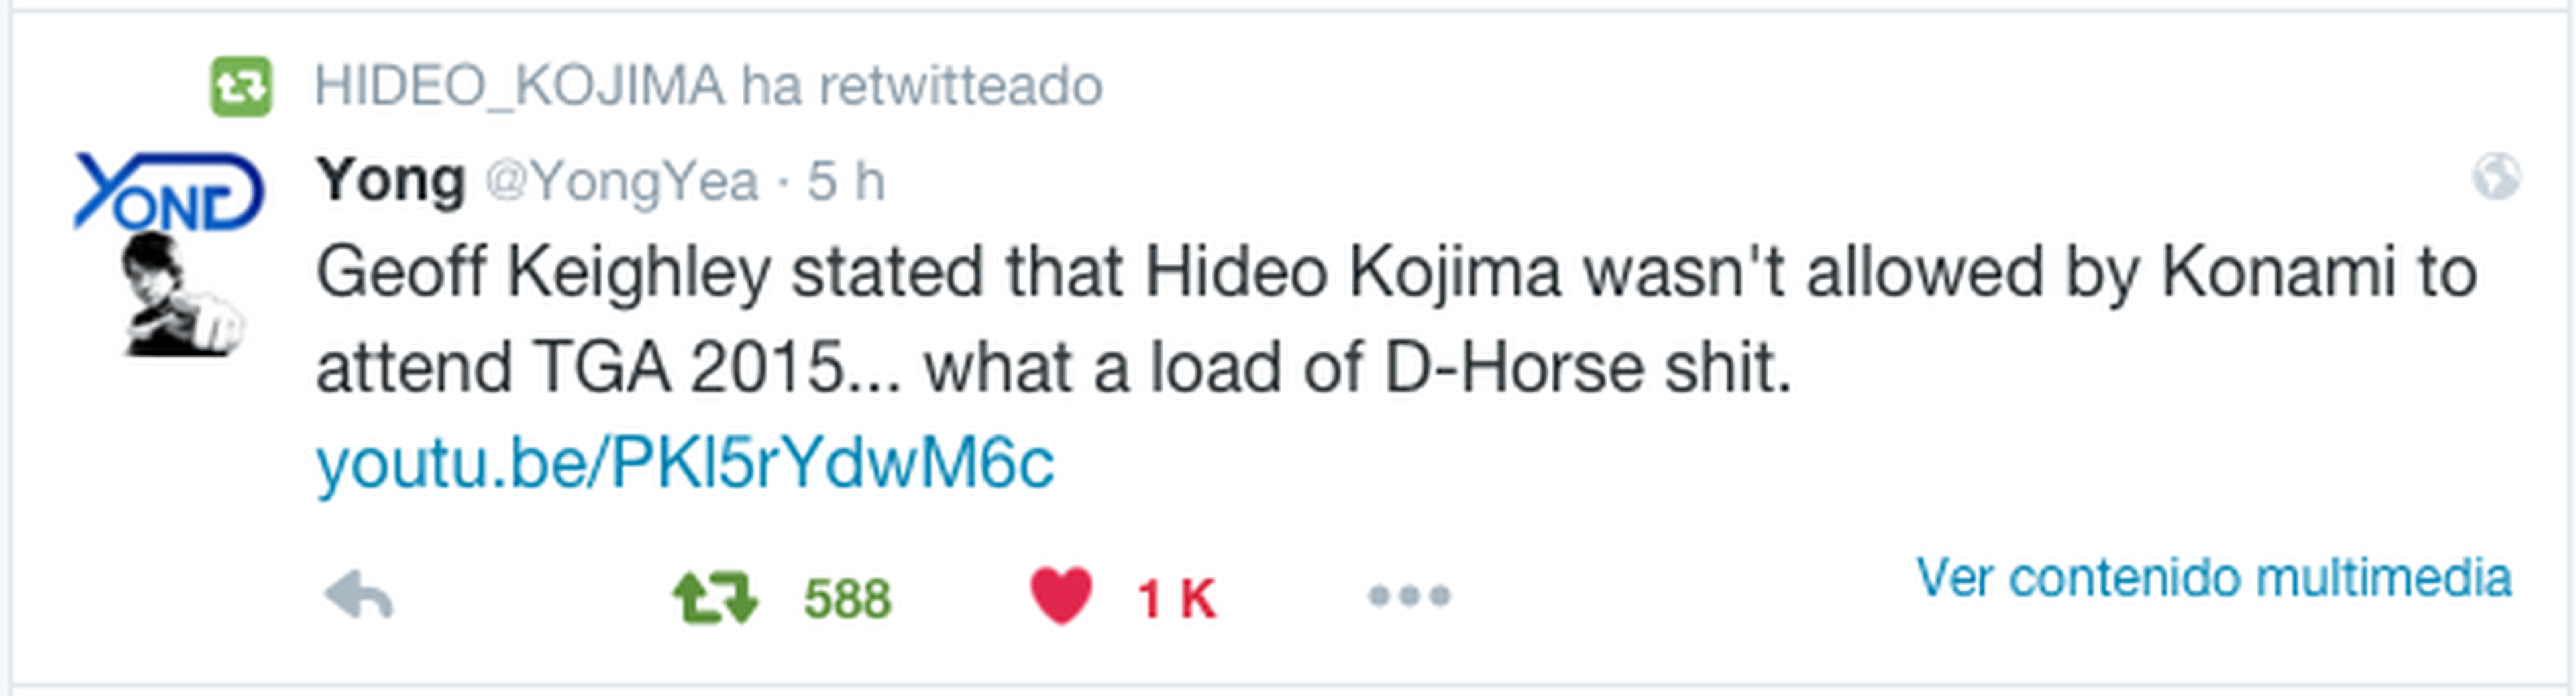 Konami prohibió a Hideo Kojima asistir a los VGA 2015